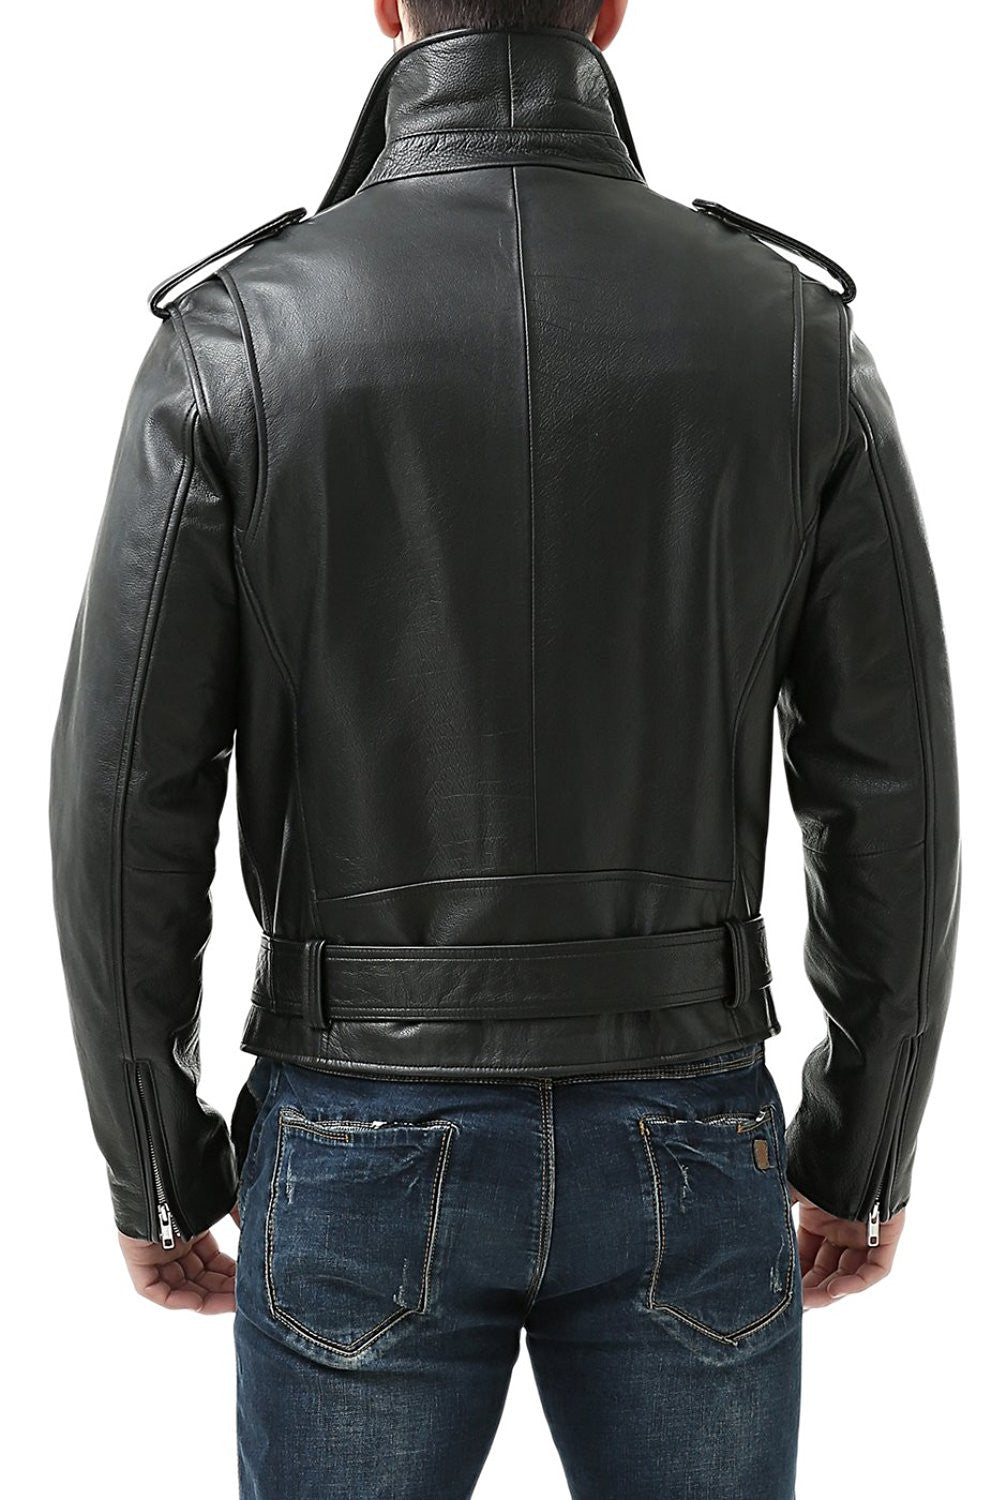 BGSD Men Classic Cowhide Leather Motorcycle Jacket